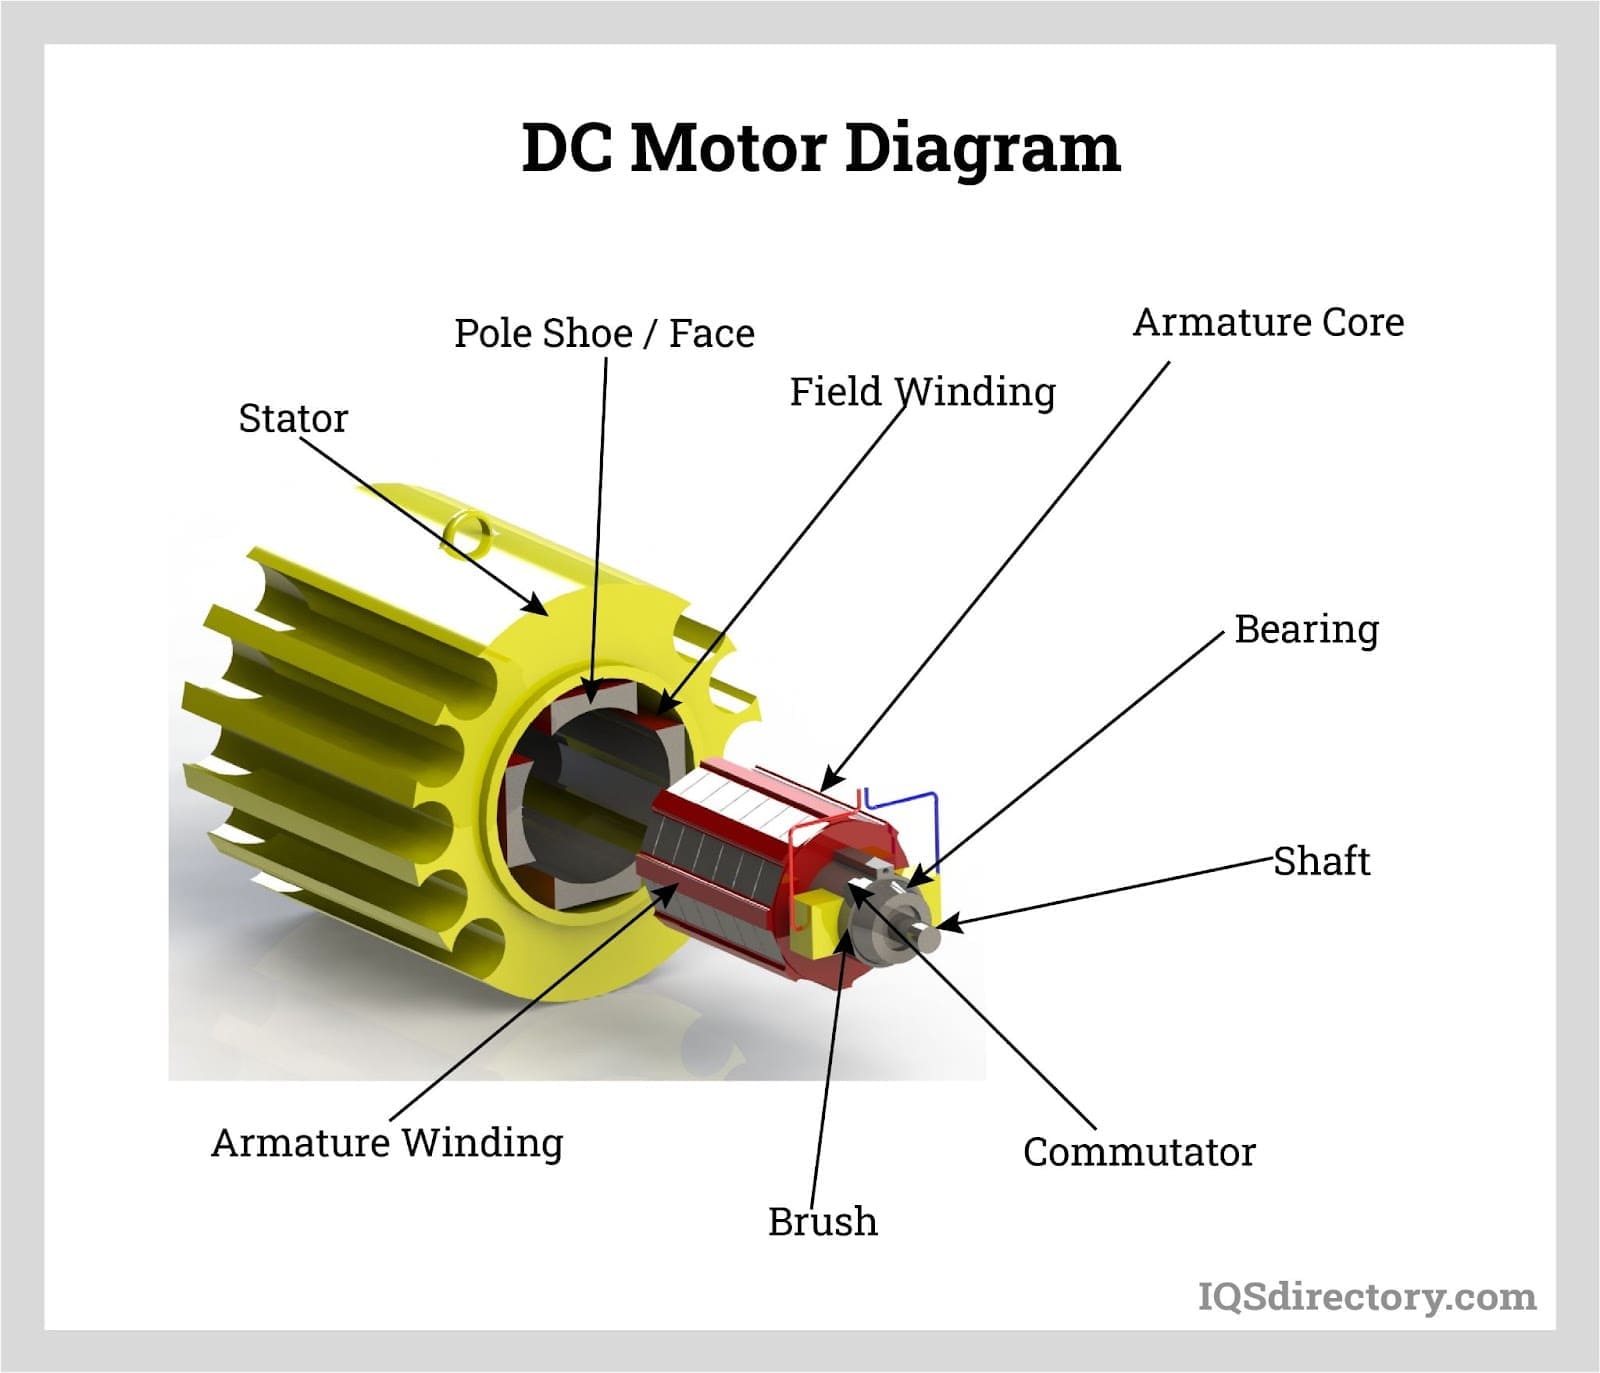 https://www.iqsdirectory.com/articles/electric-motor/dc-motor-diagram.jpg